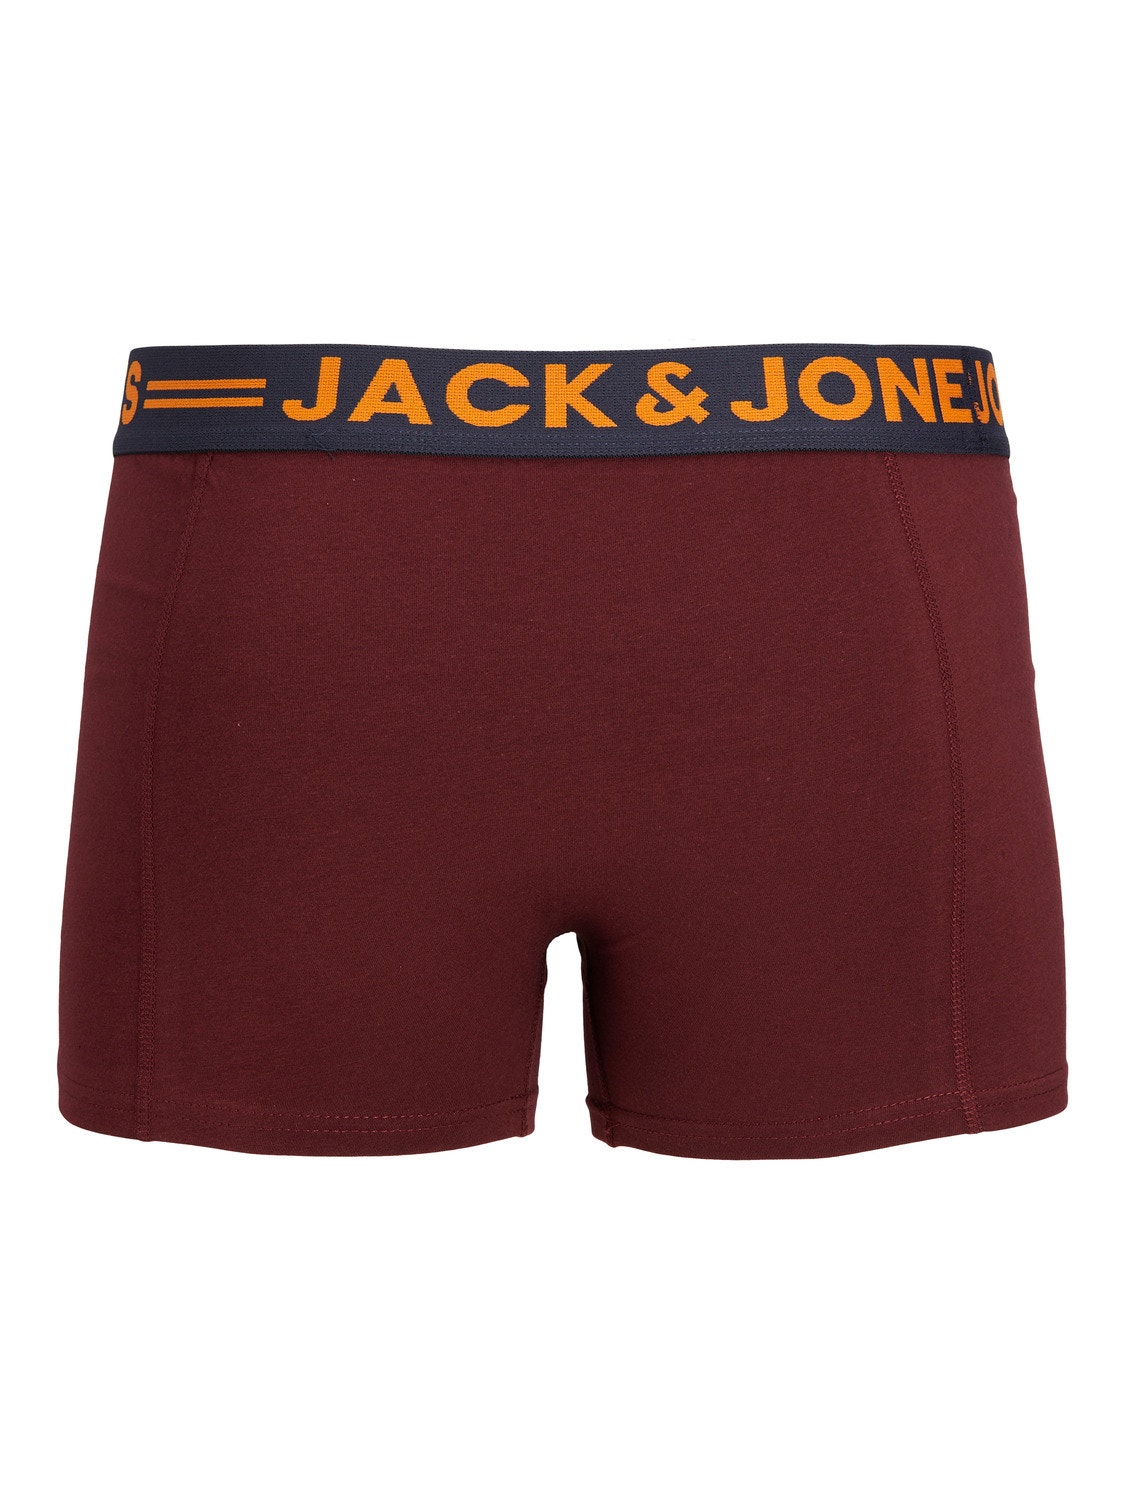 Jack & Jones 3-pack Boxershorts -Burgundy - 12113943